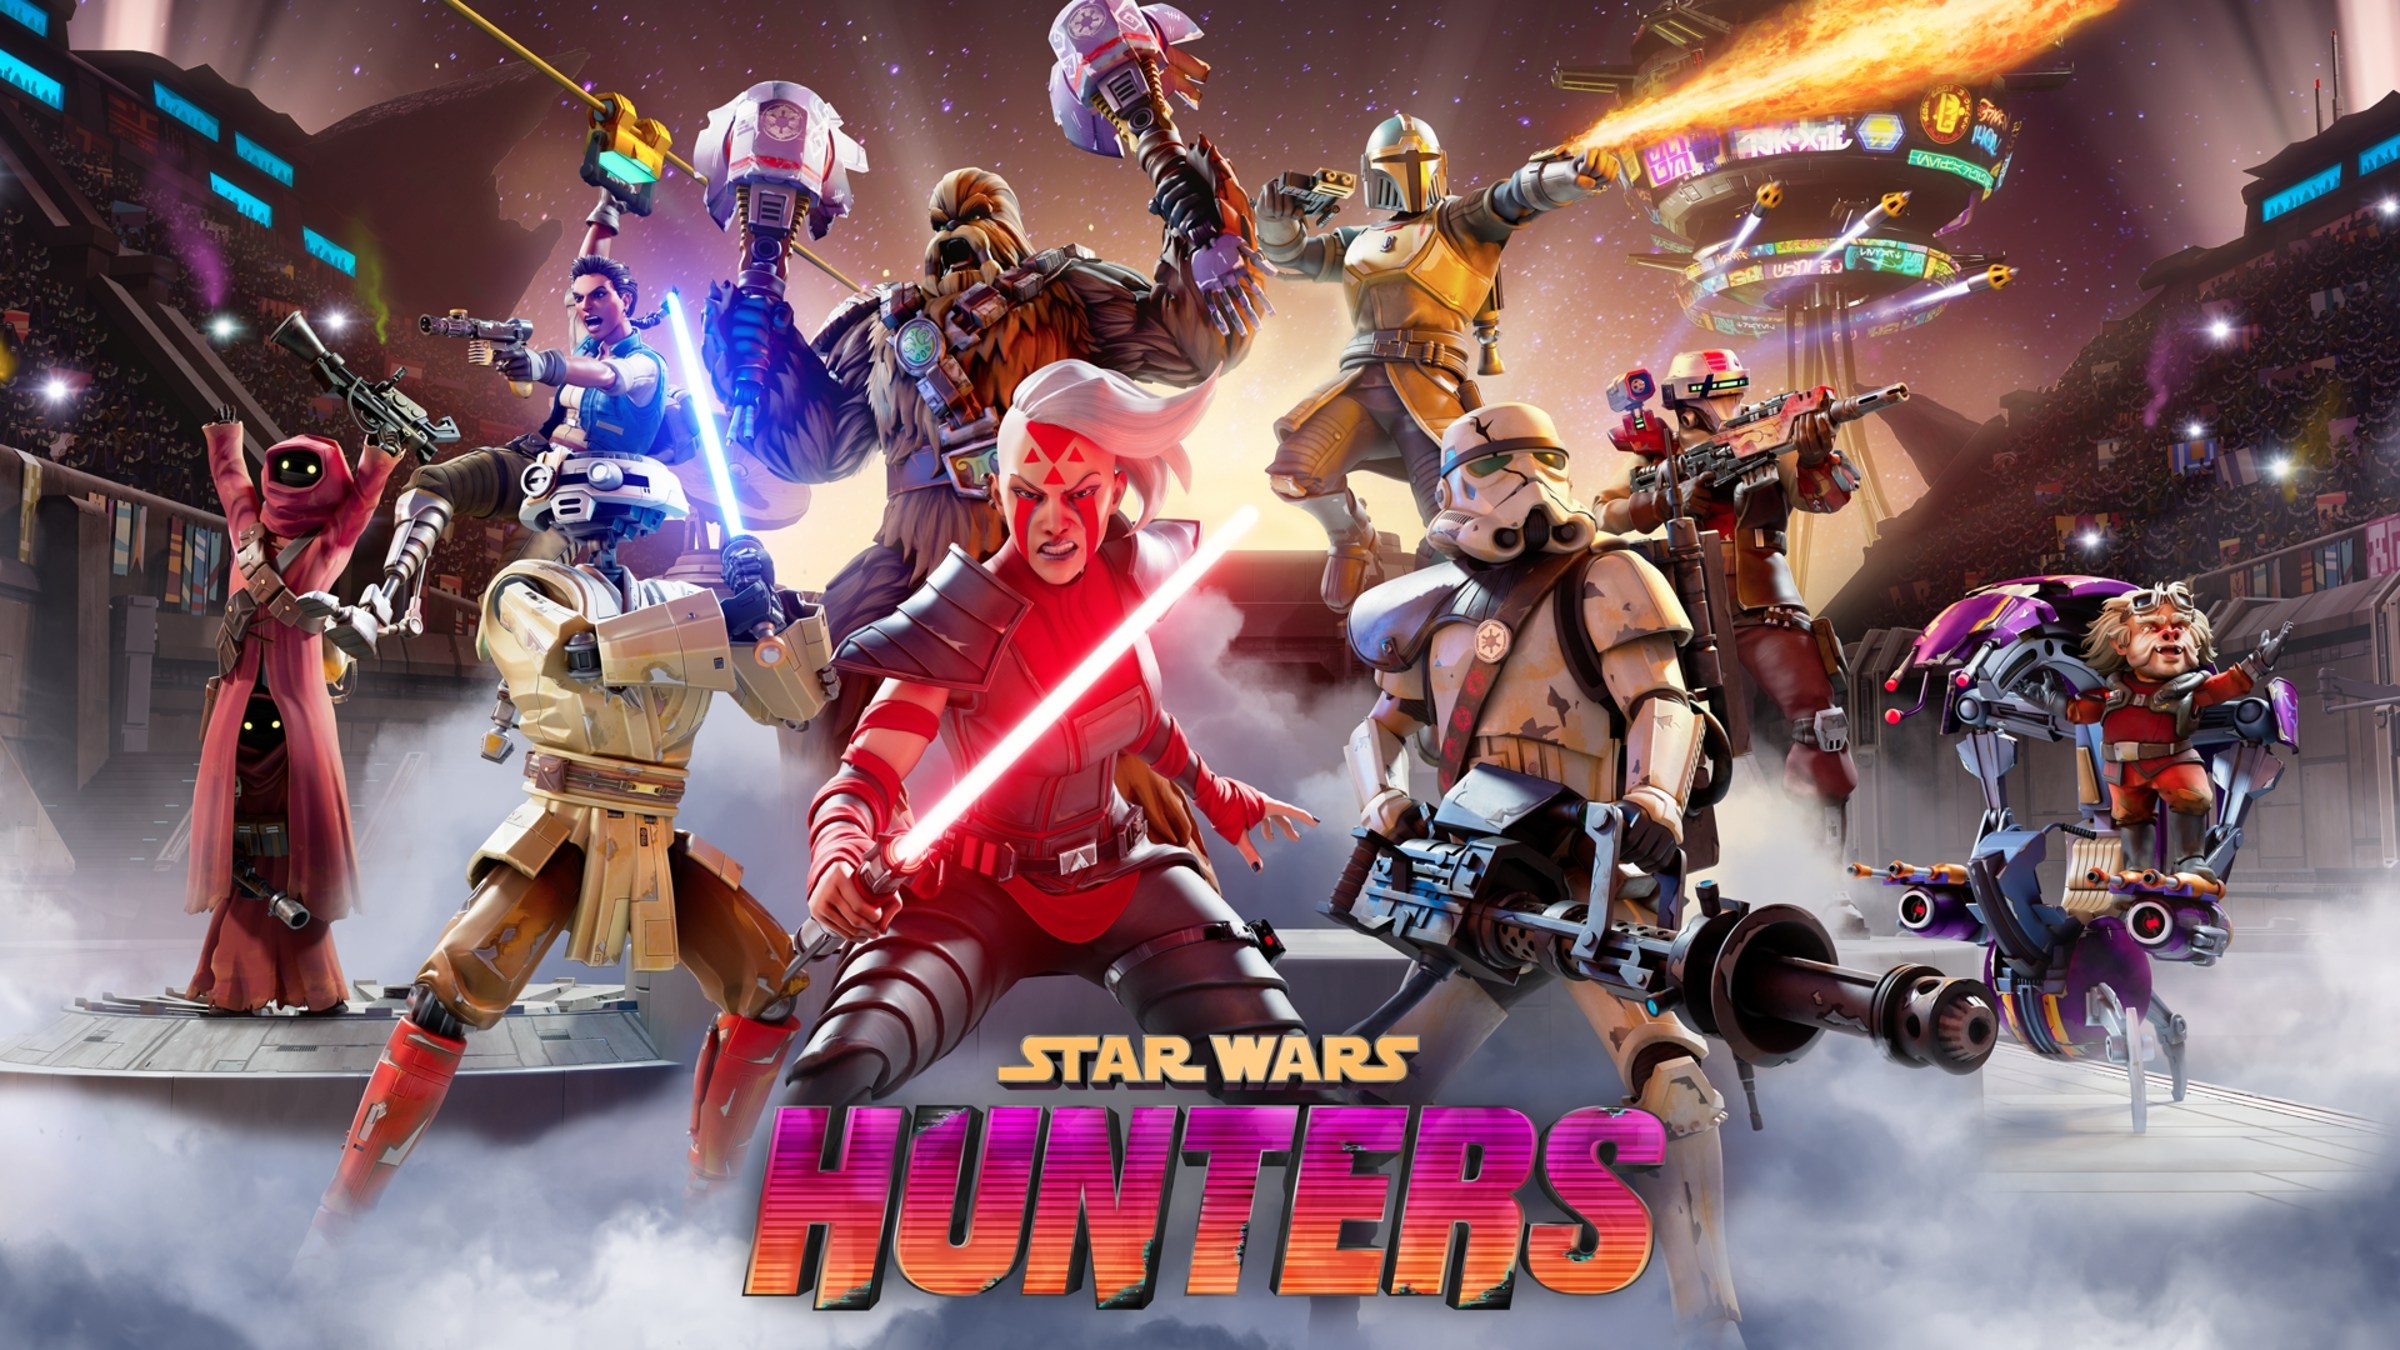 Star Wars Hunters [Zynga] Af583cbc9ece0bbd216dca614170a8bb3078756af064854ed4f4f5747b960216